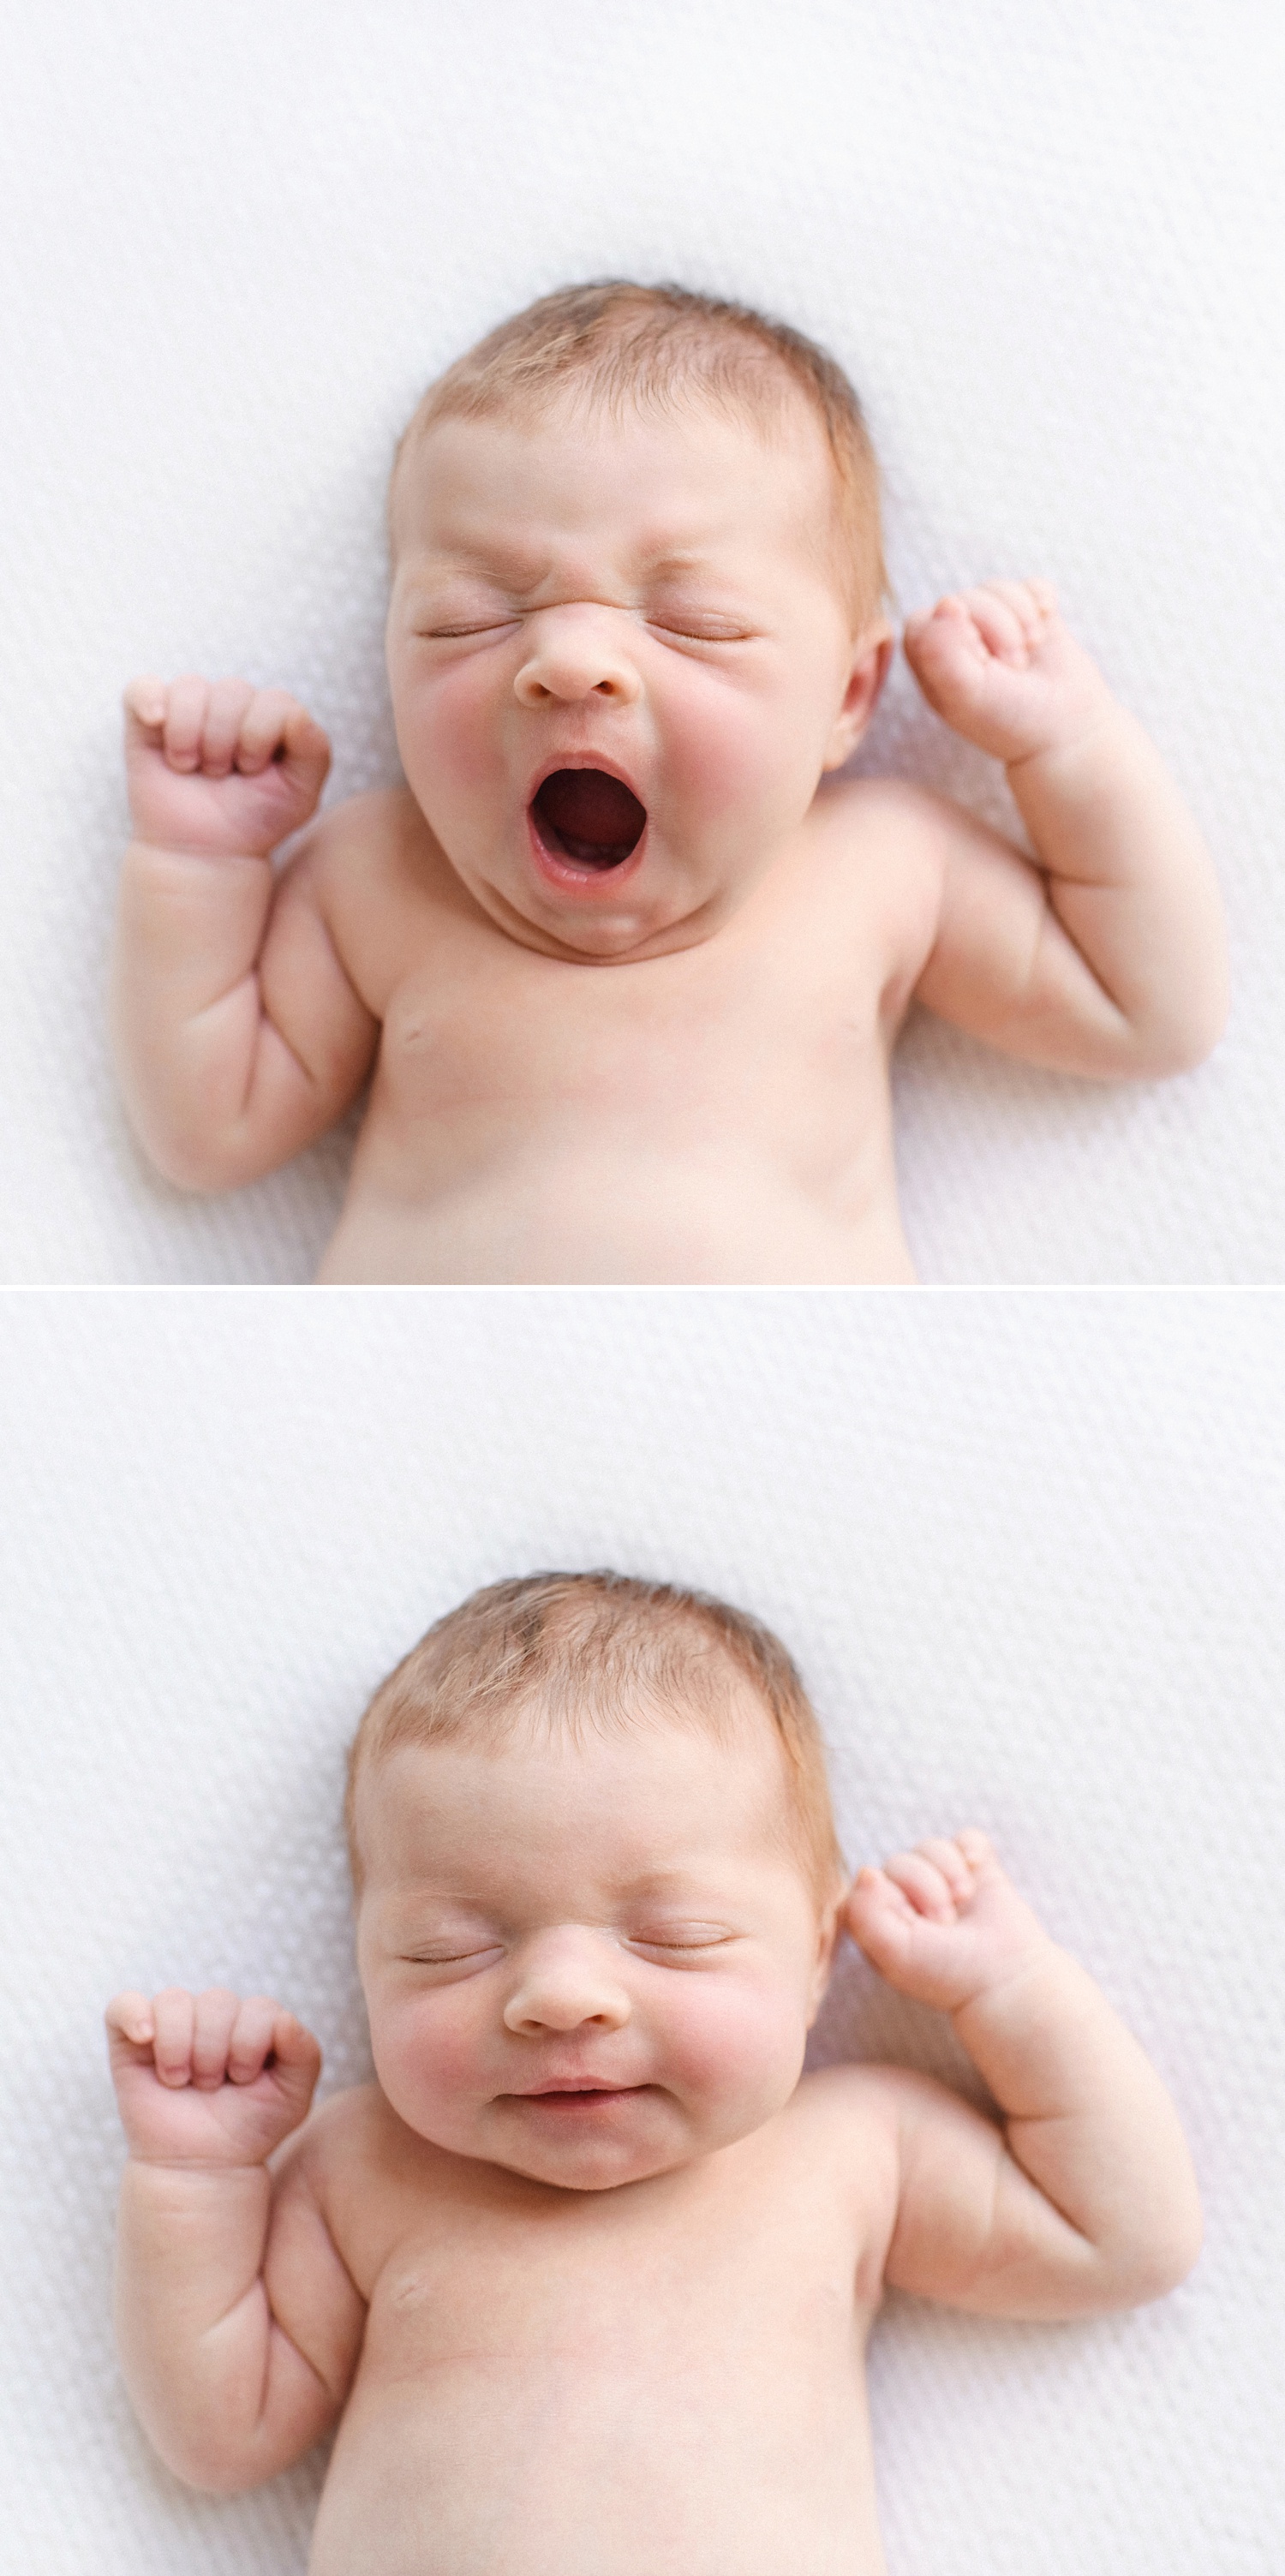 newborn baby yawning and smiling
